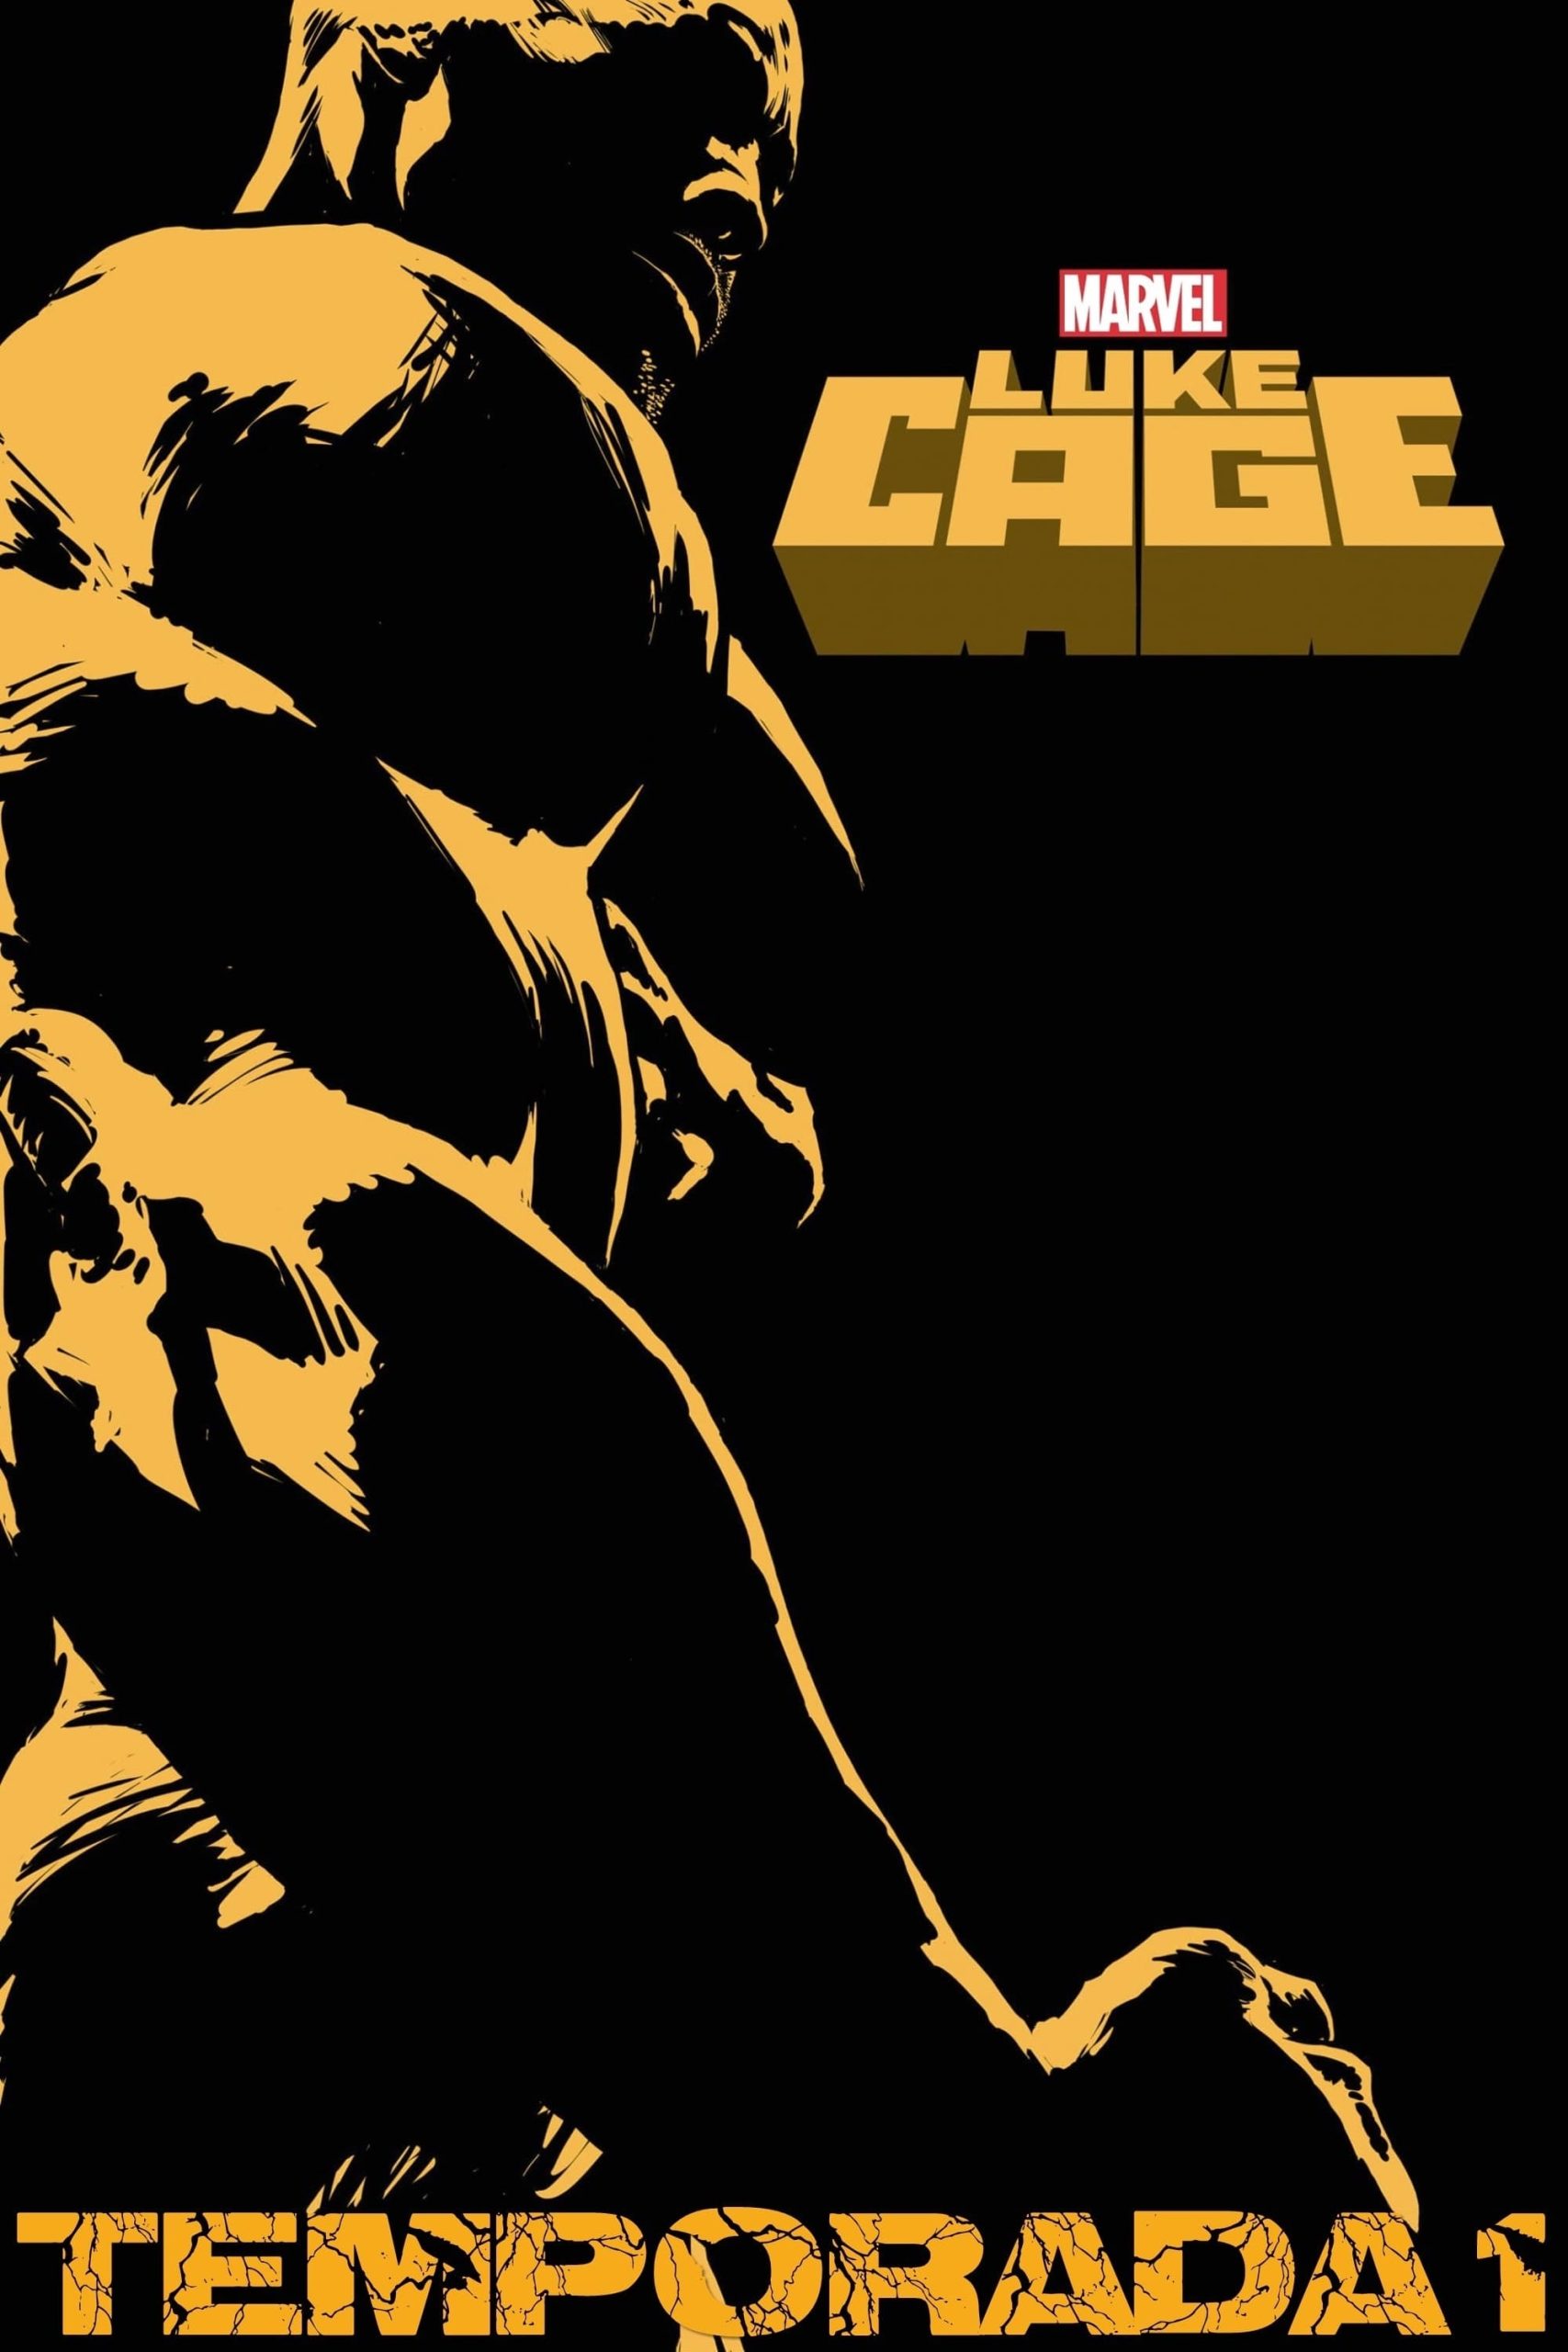 Marvel s Luke Cage (2016) มาร์เวล ลุคเคจ ปี 1